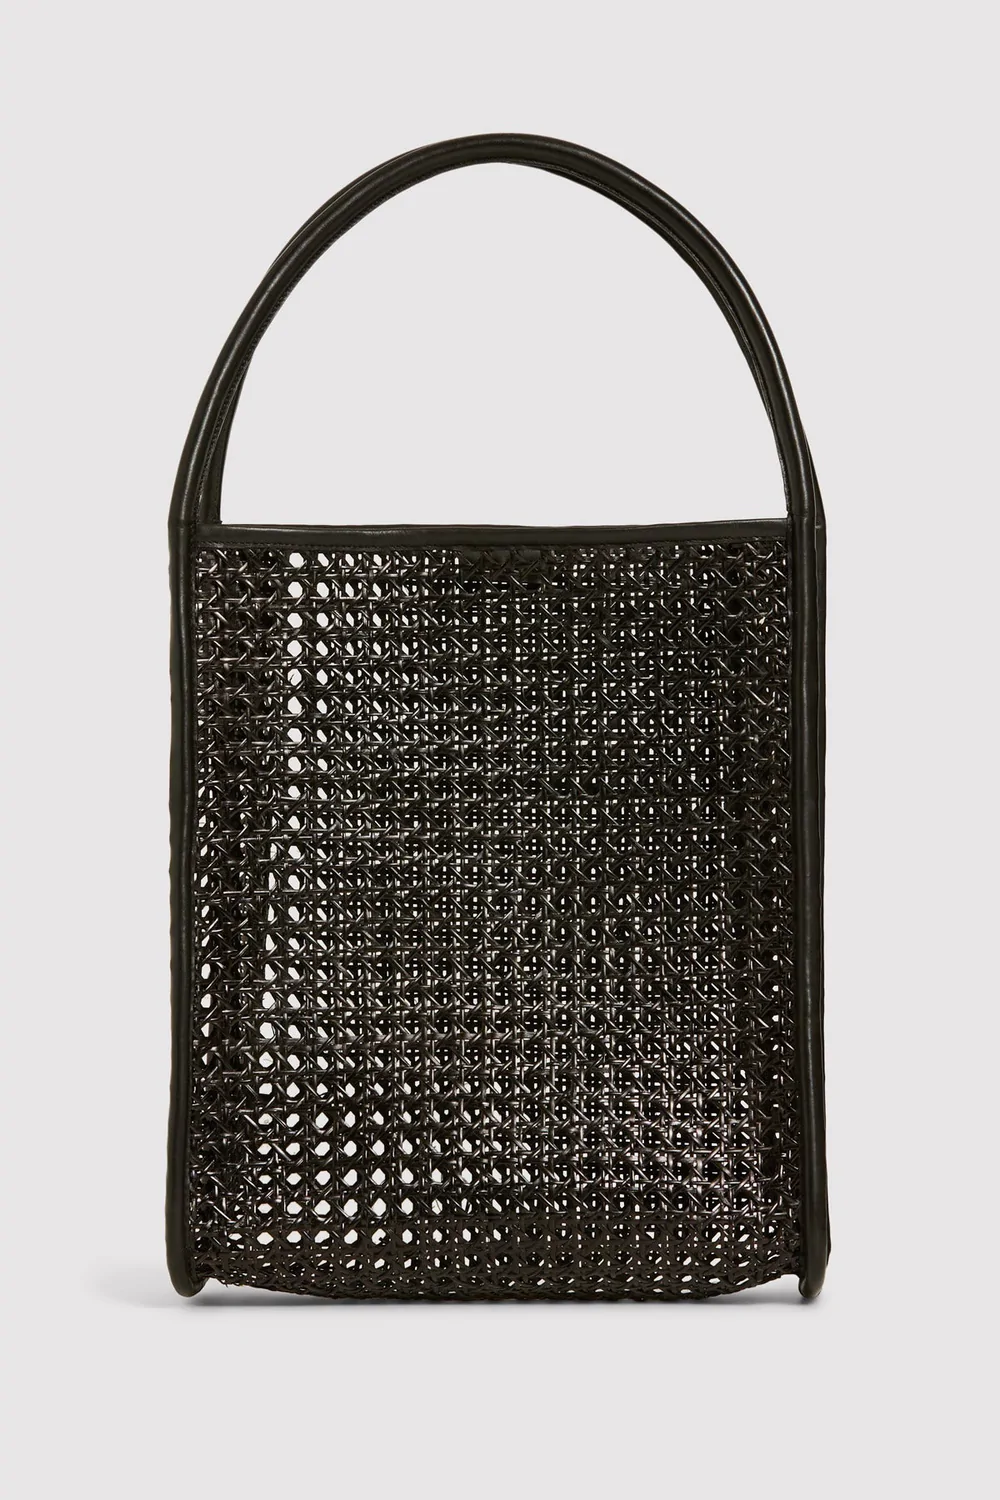 Product Image for Rattan Tote Bag, Black